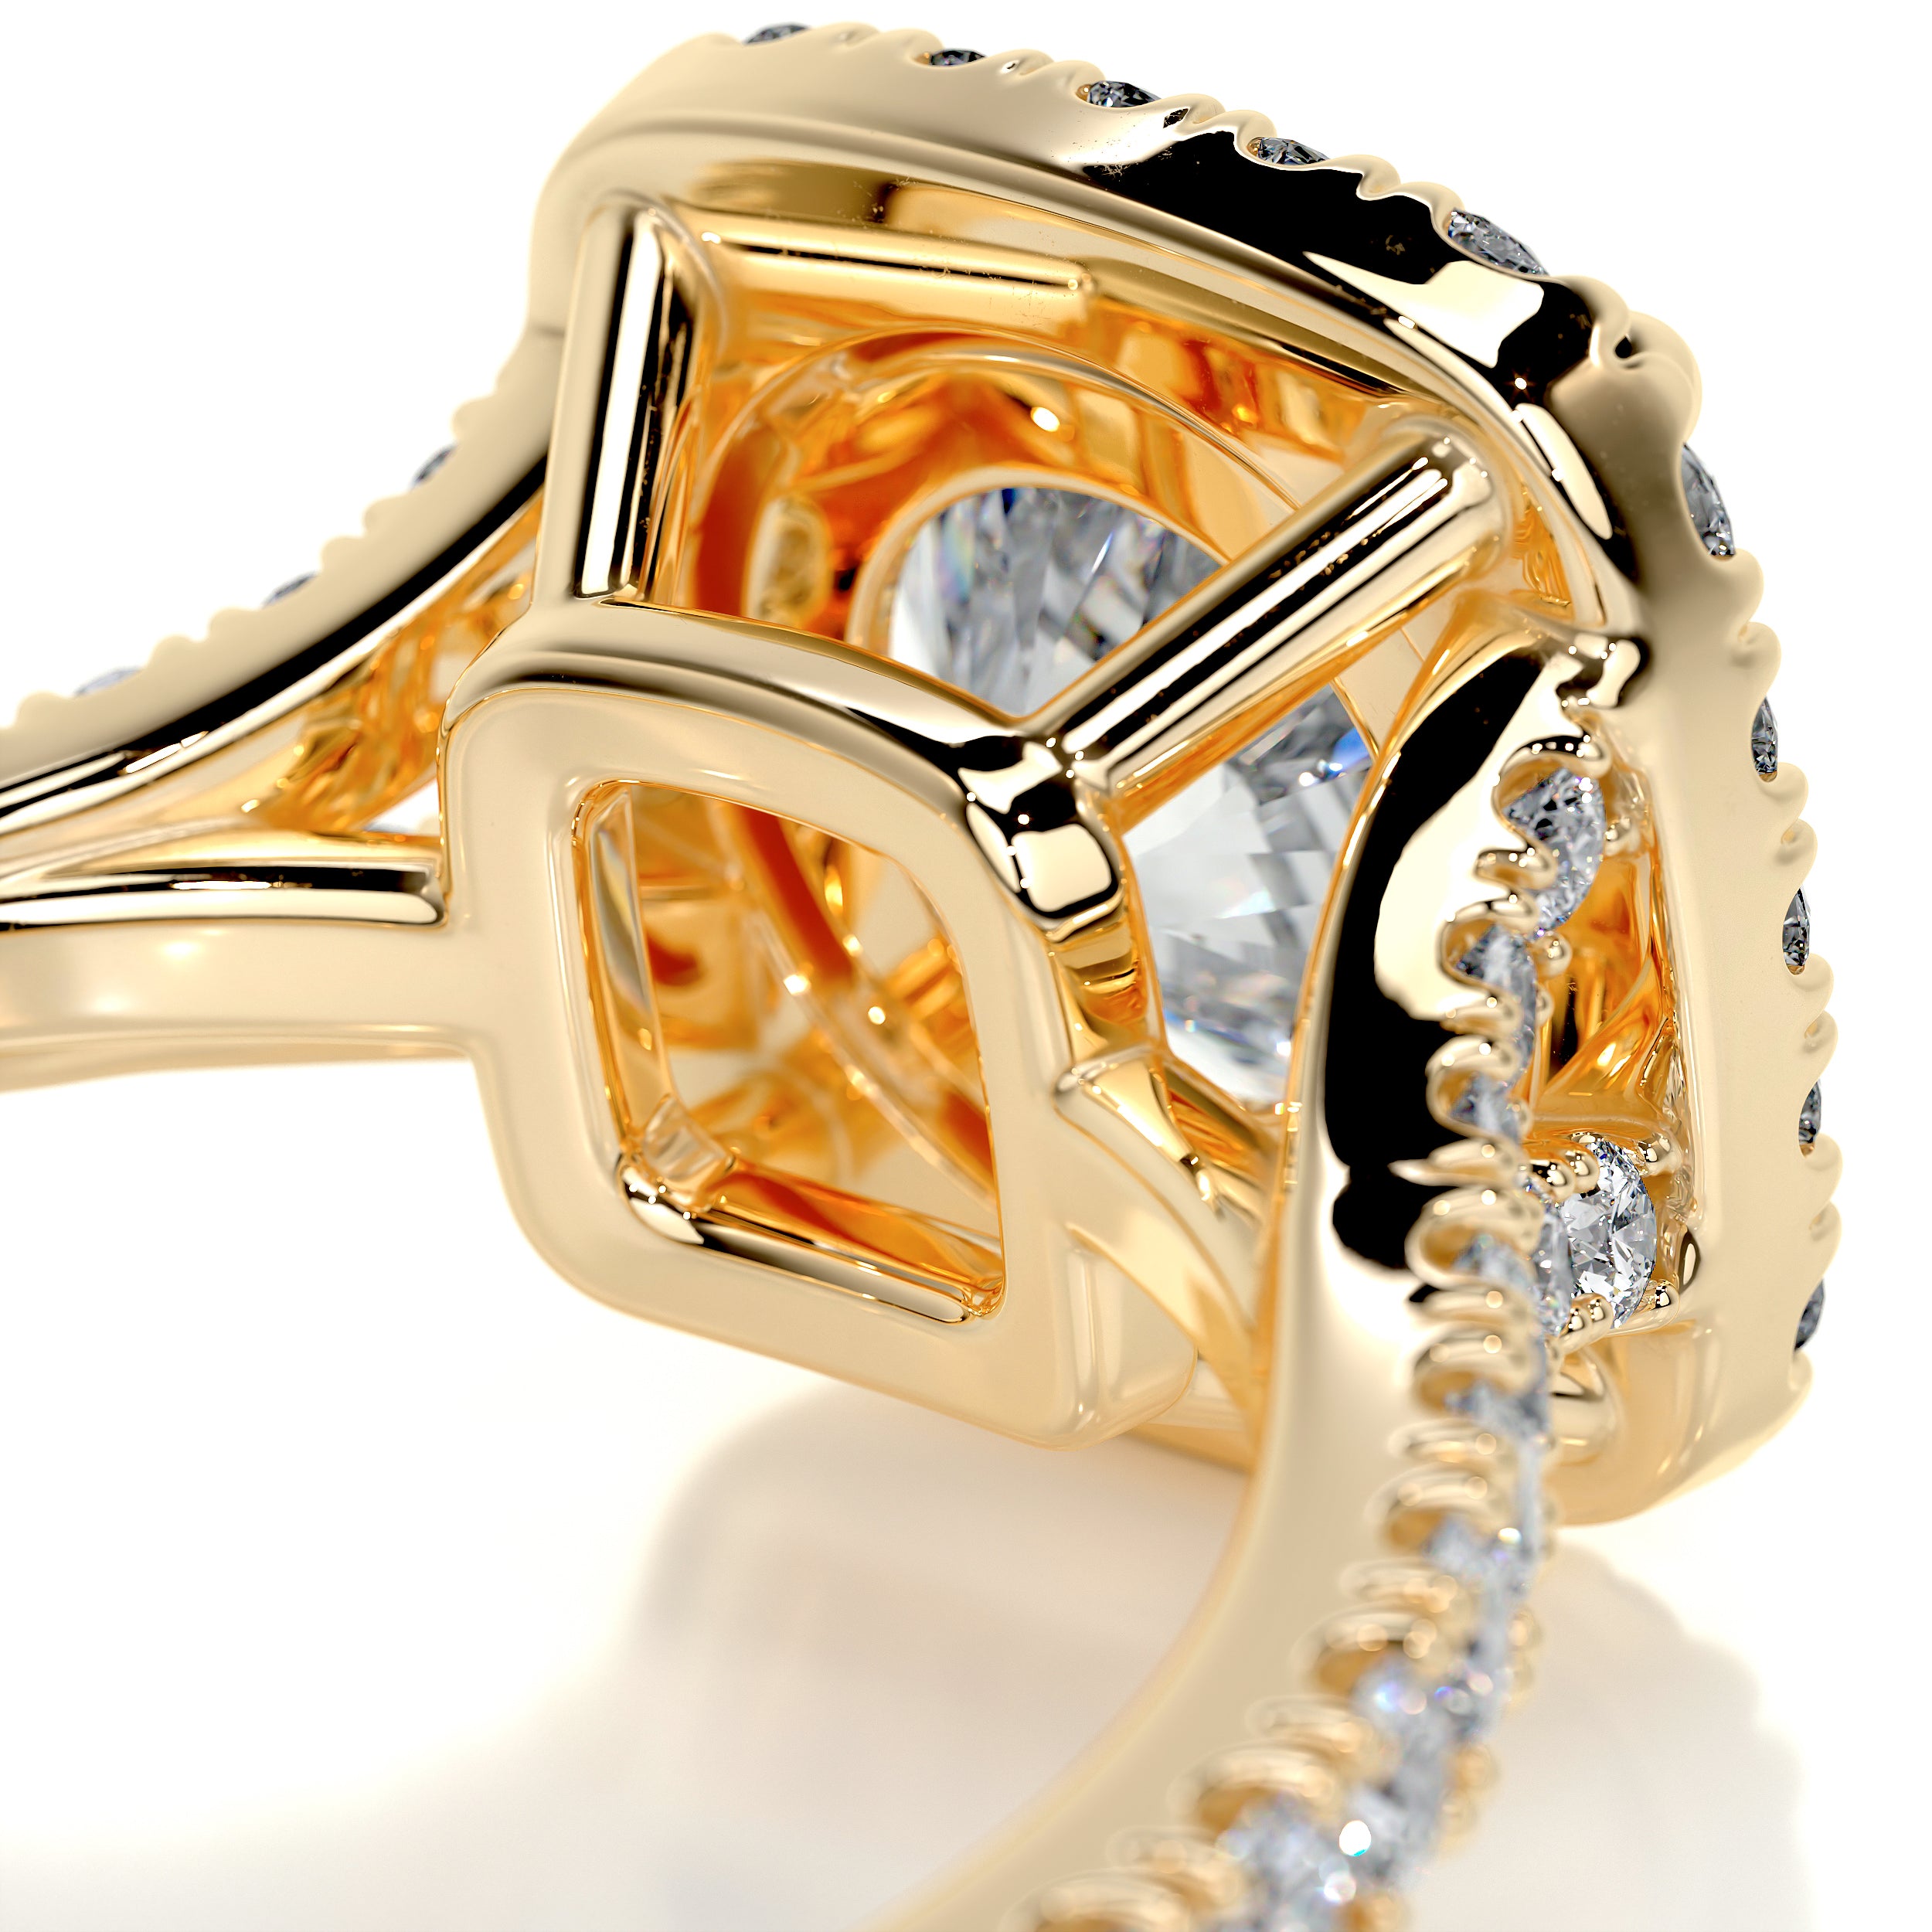 Addison Diamond Engagement Ring   (2 Carat) -18K Yellow Gold